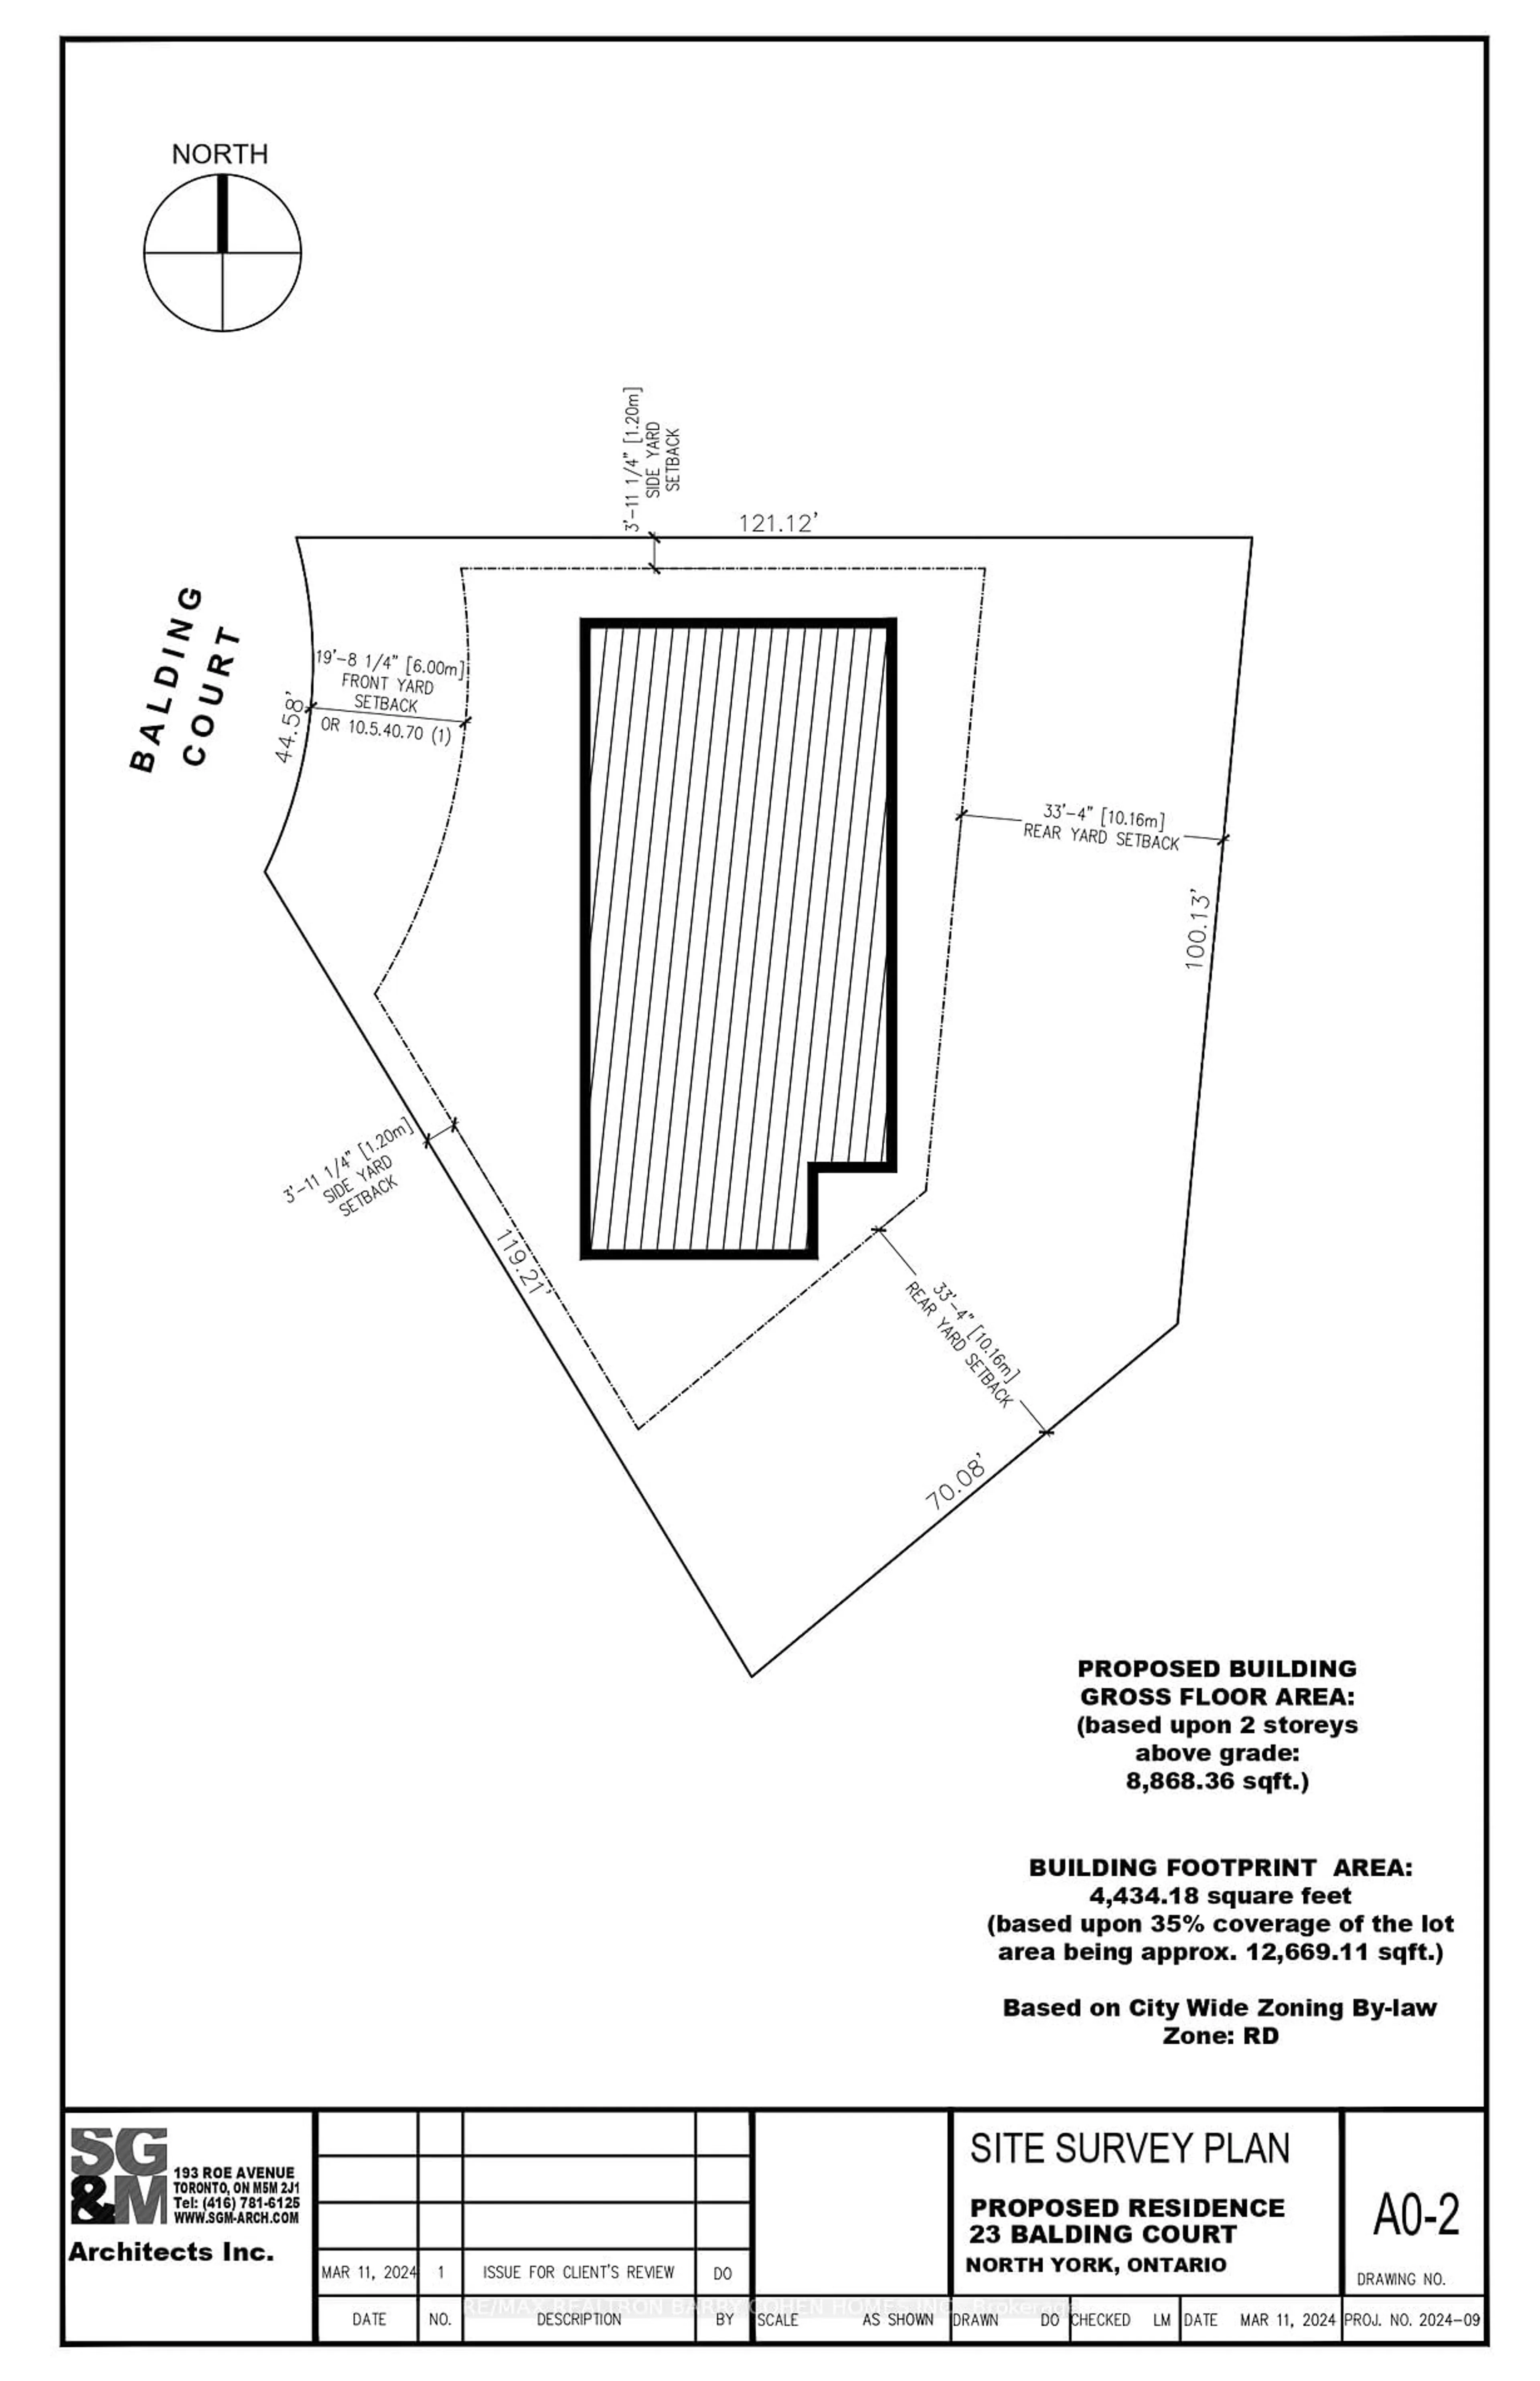 Floor plan for 23 Balding Crt, Toronto Ontario M2P 1Y8